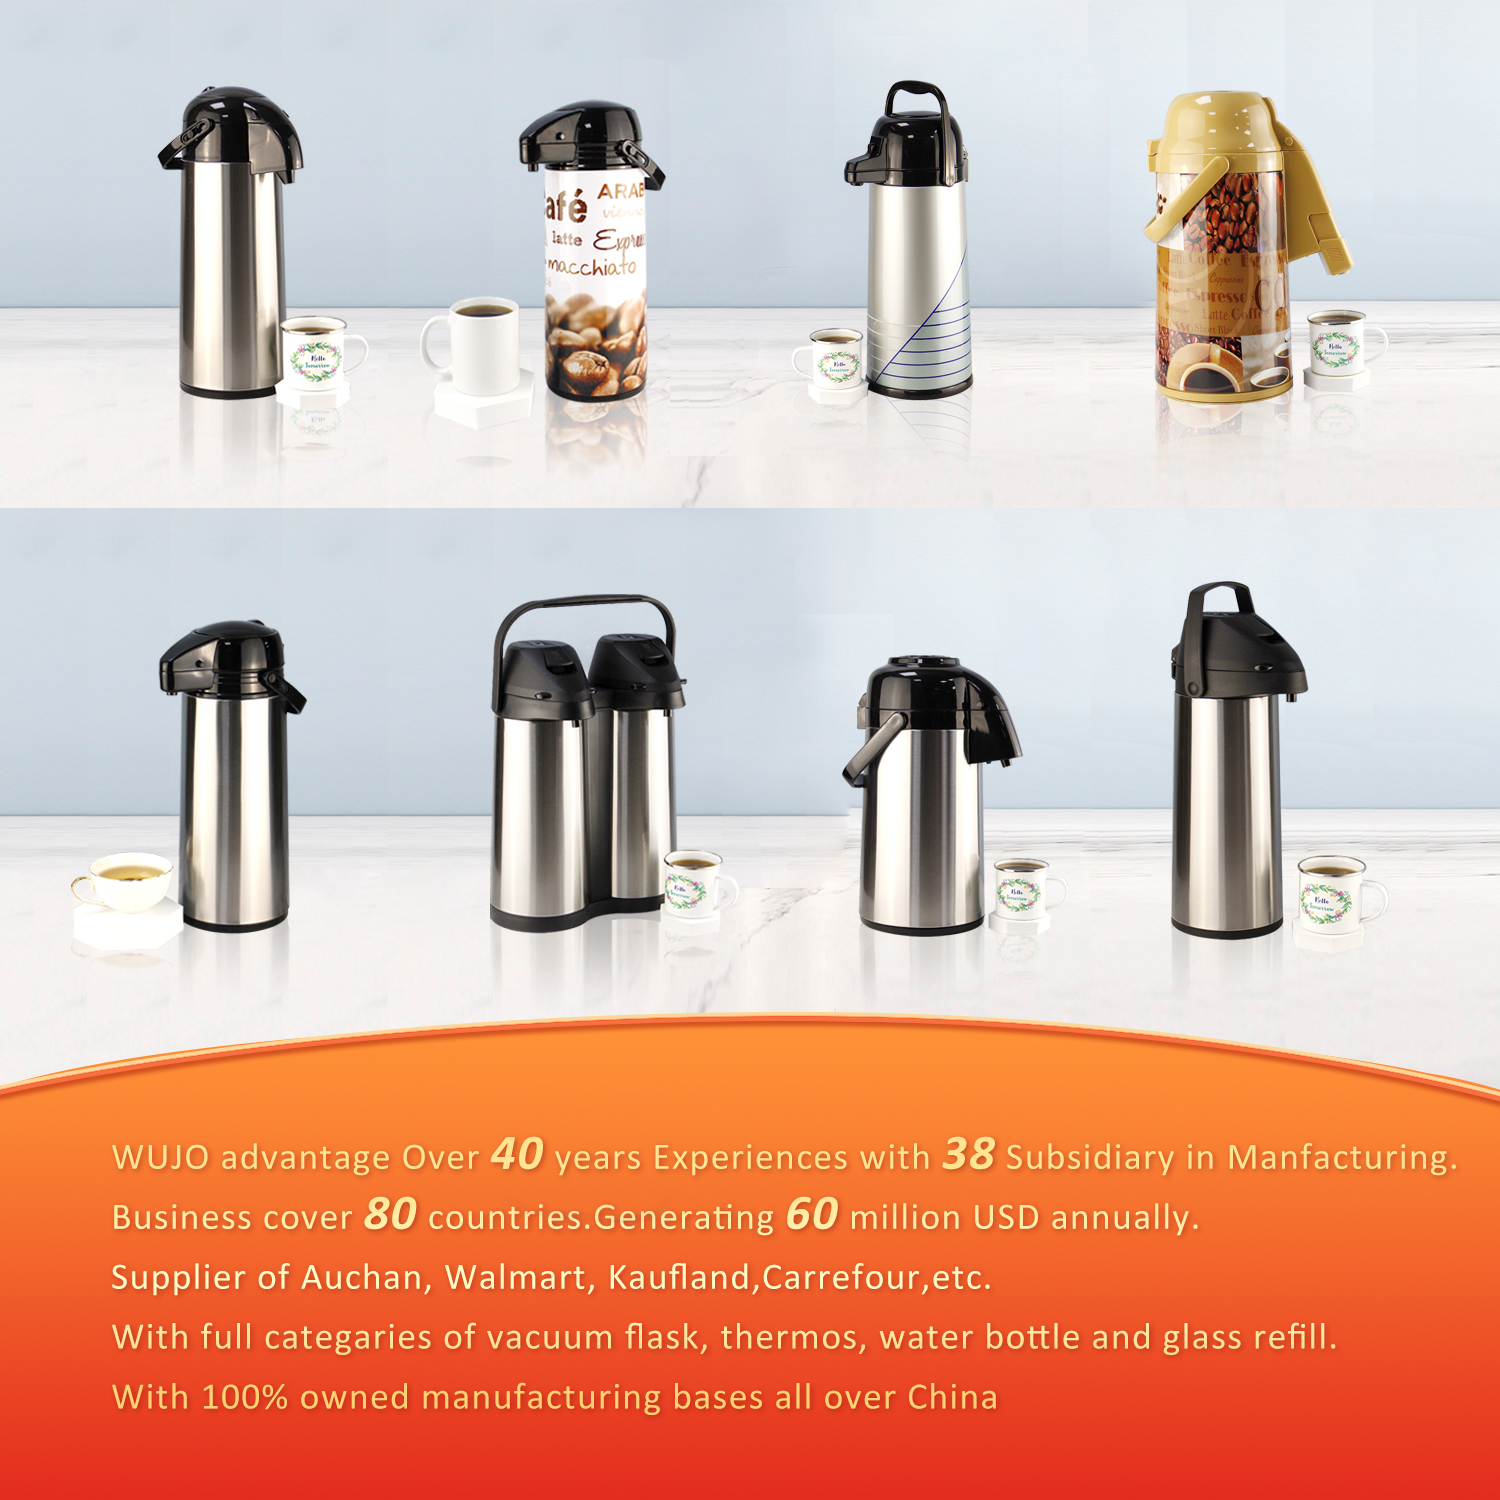 WUJO Commercial OEM Full Printing Hot Water Tea Coffee Thermal Pump Pot